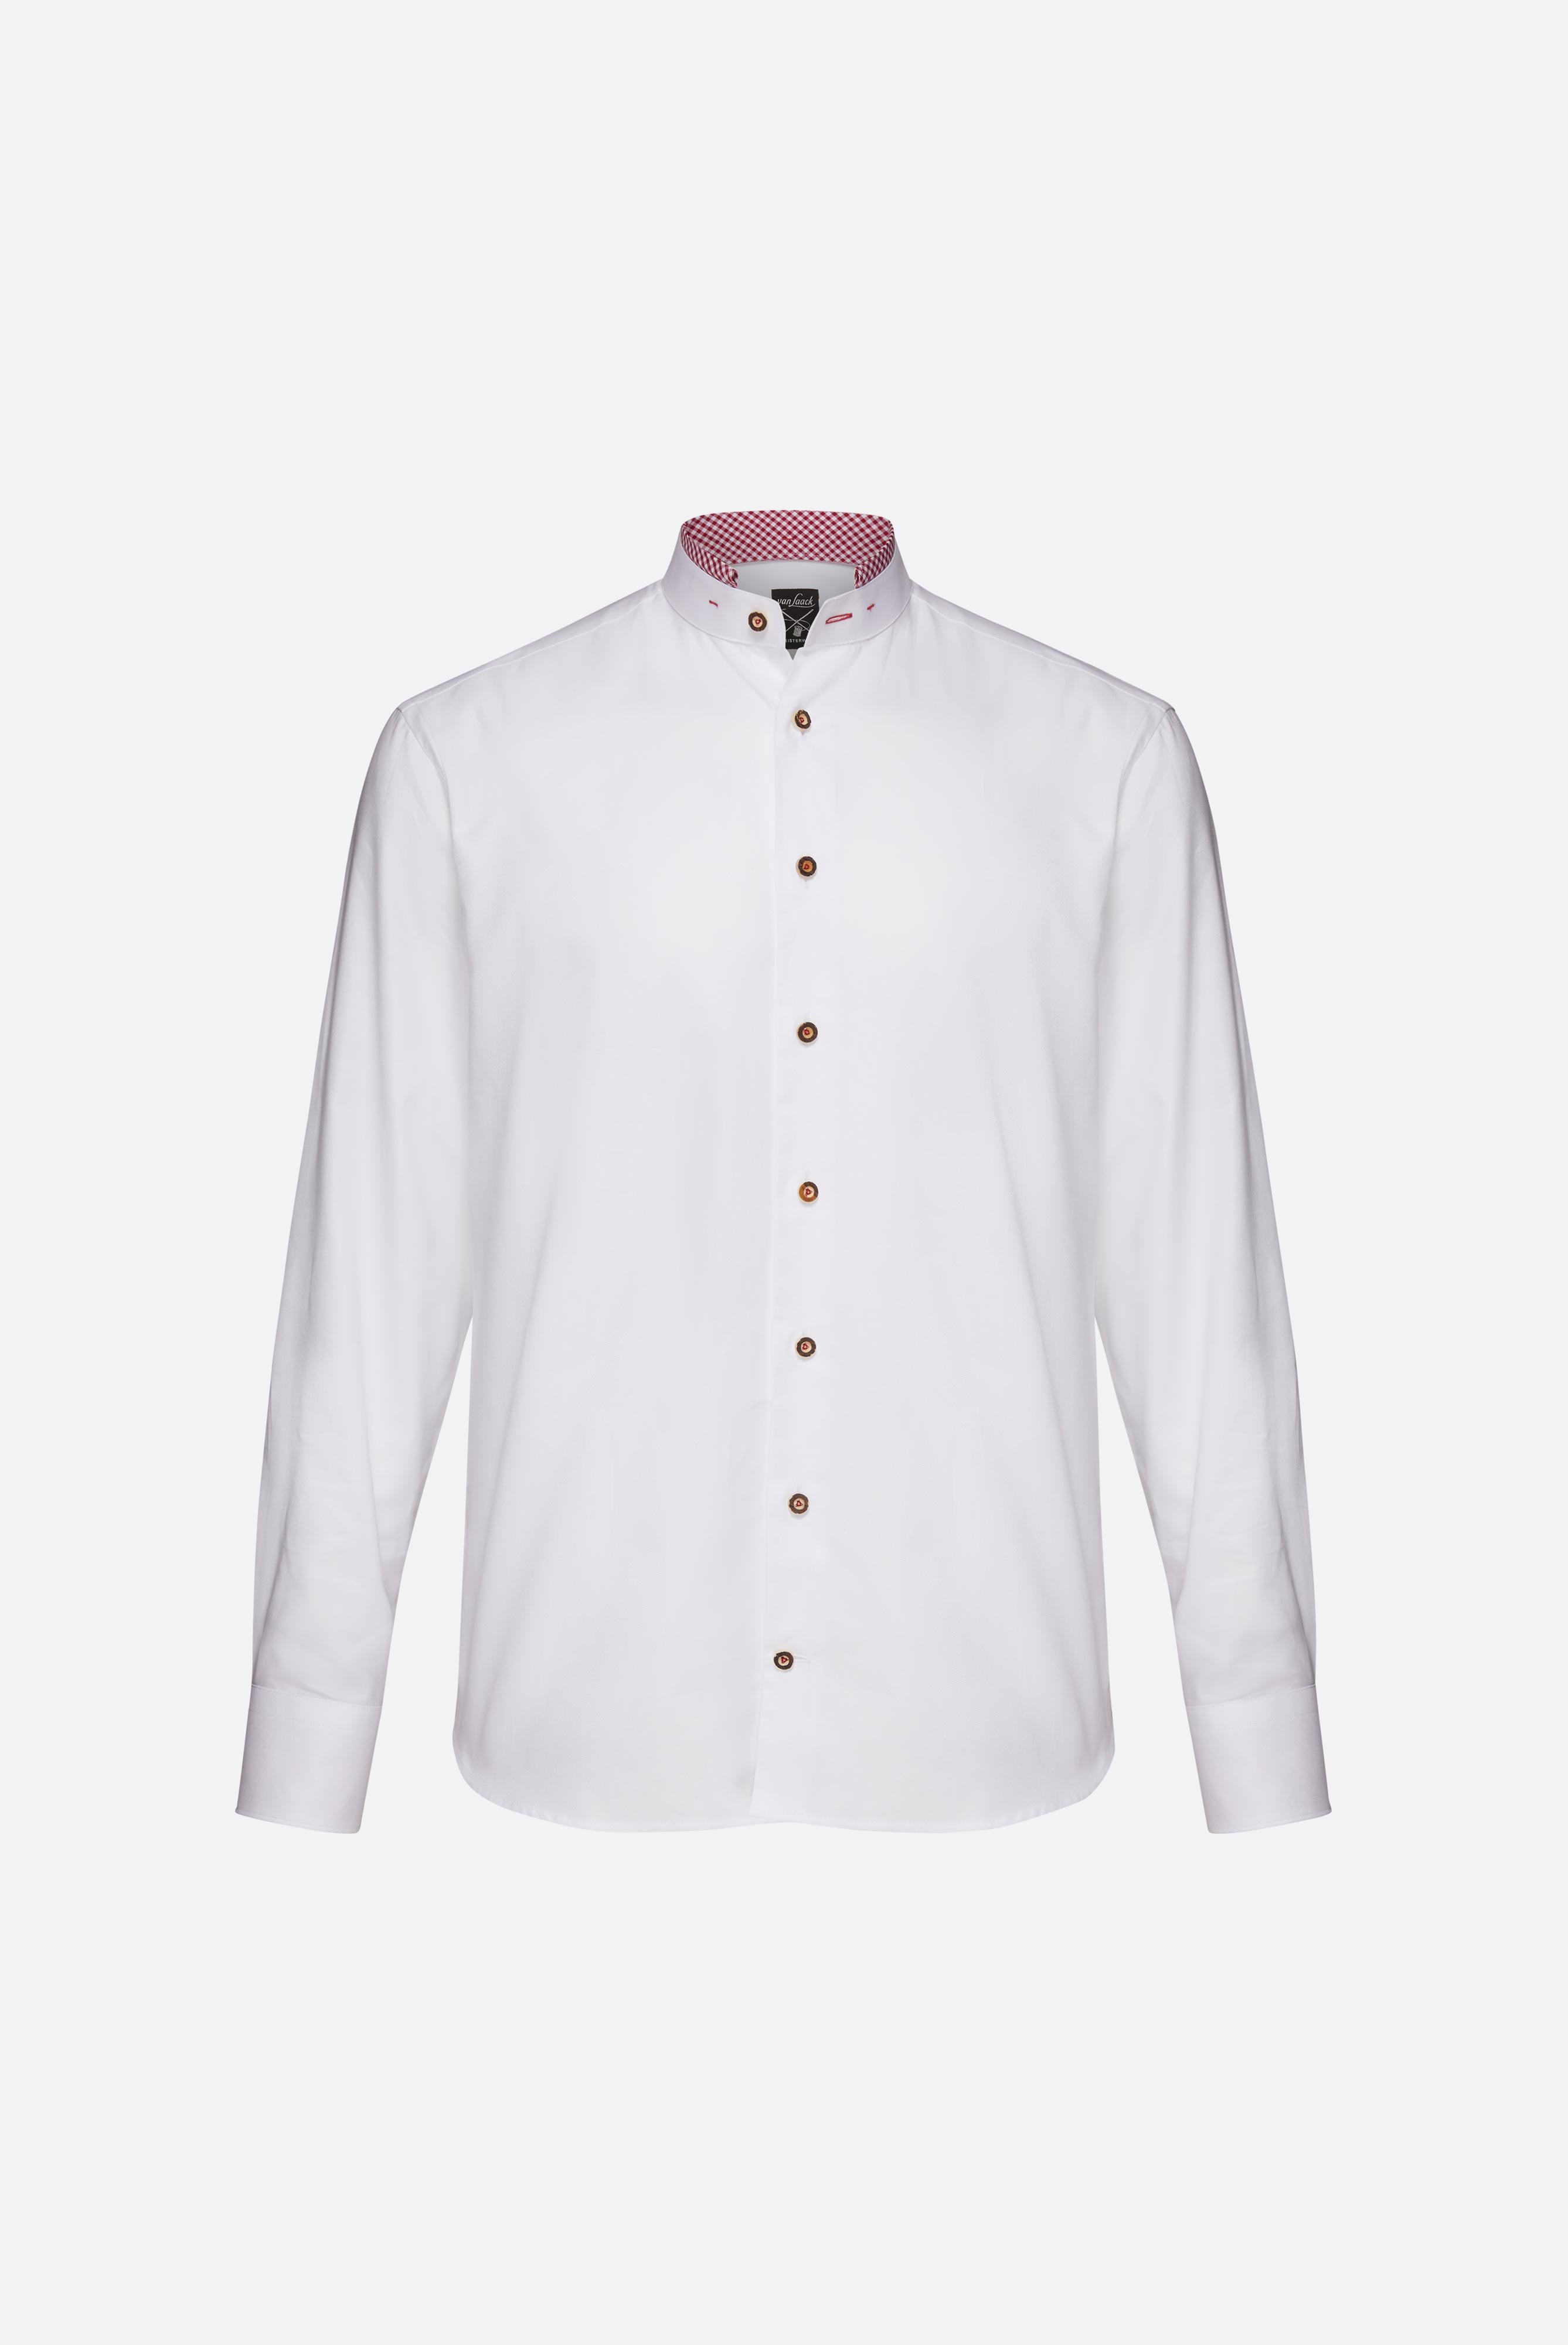 Festliche Hemden+Oxford Tradtional Shirt with coloured detail+20.2081.8Q.150251.005.38